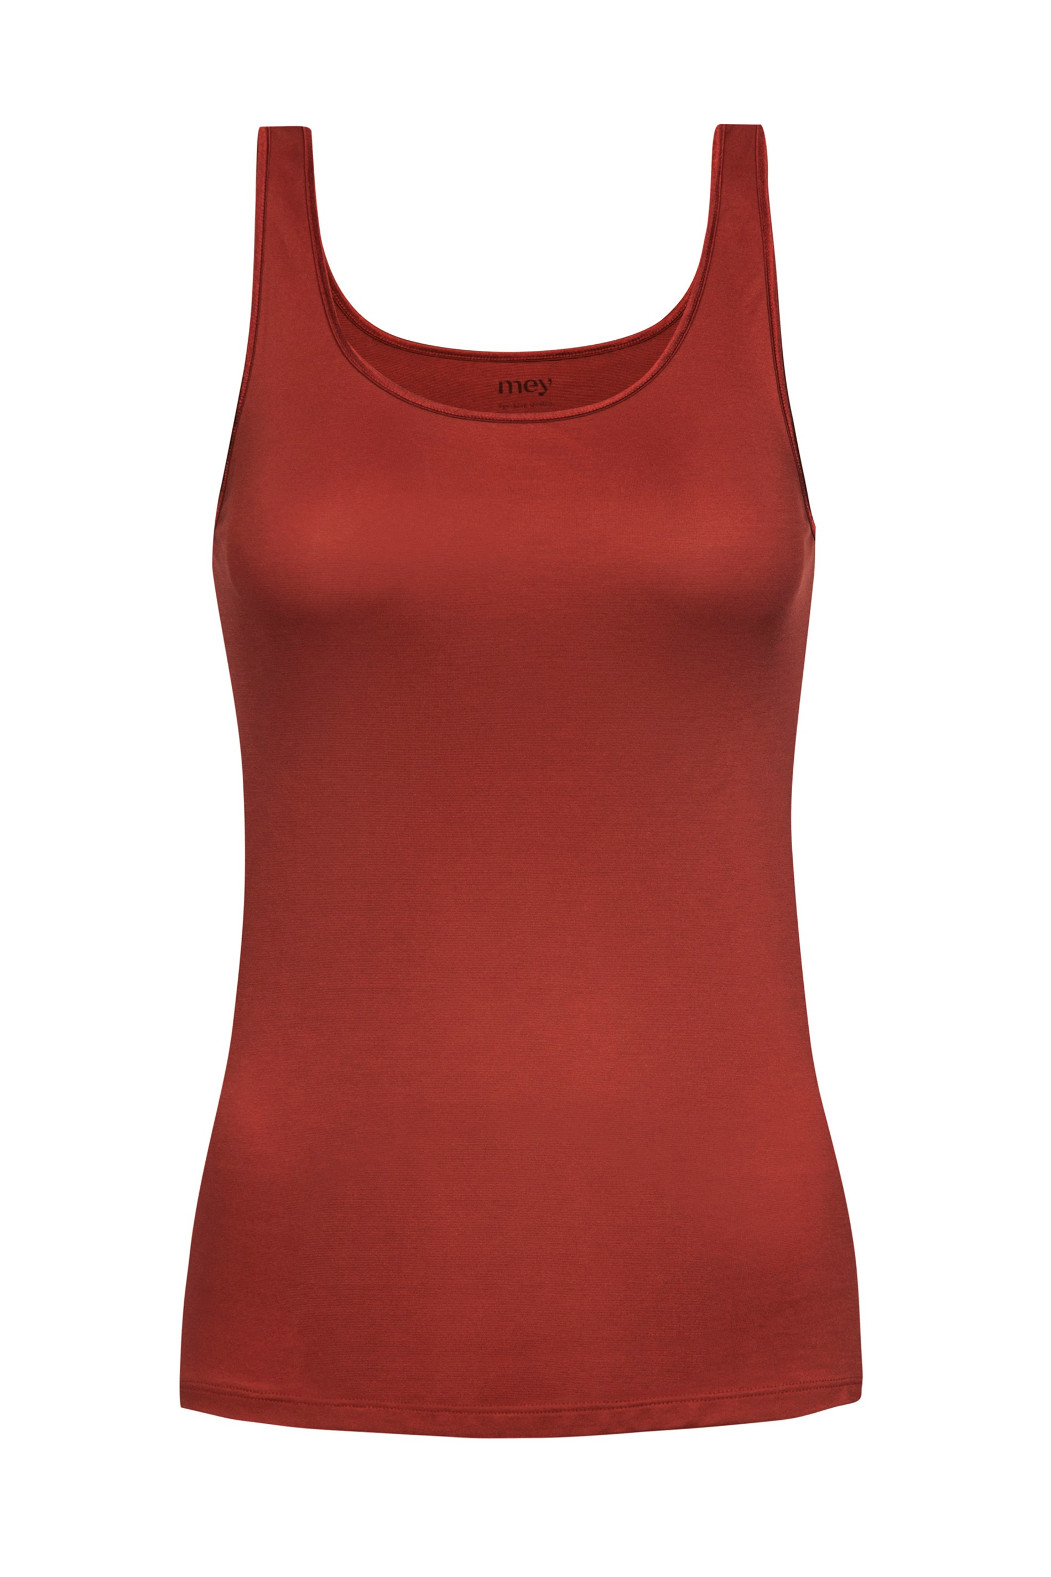 Mey Serie Emotion Damen Sporty-Hemd breite Träger red pepper